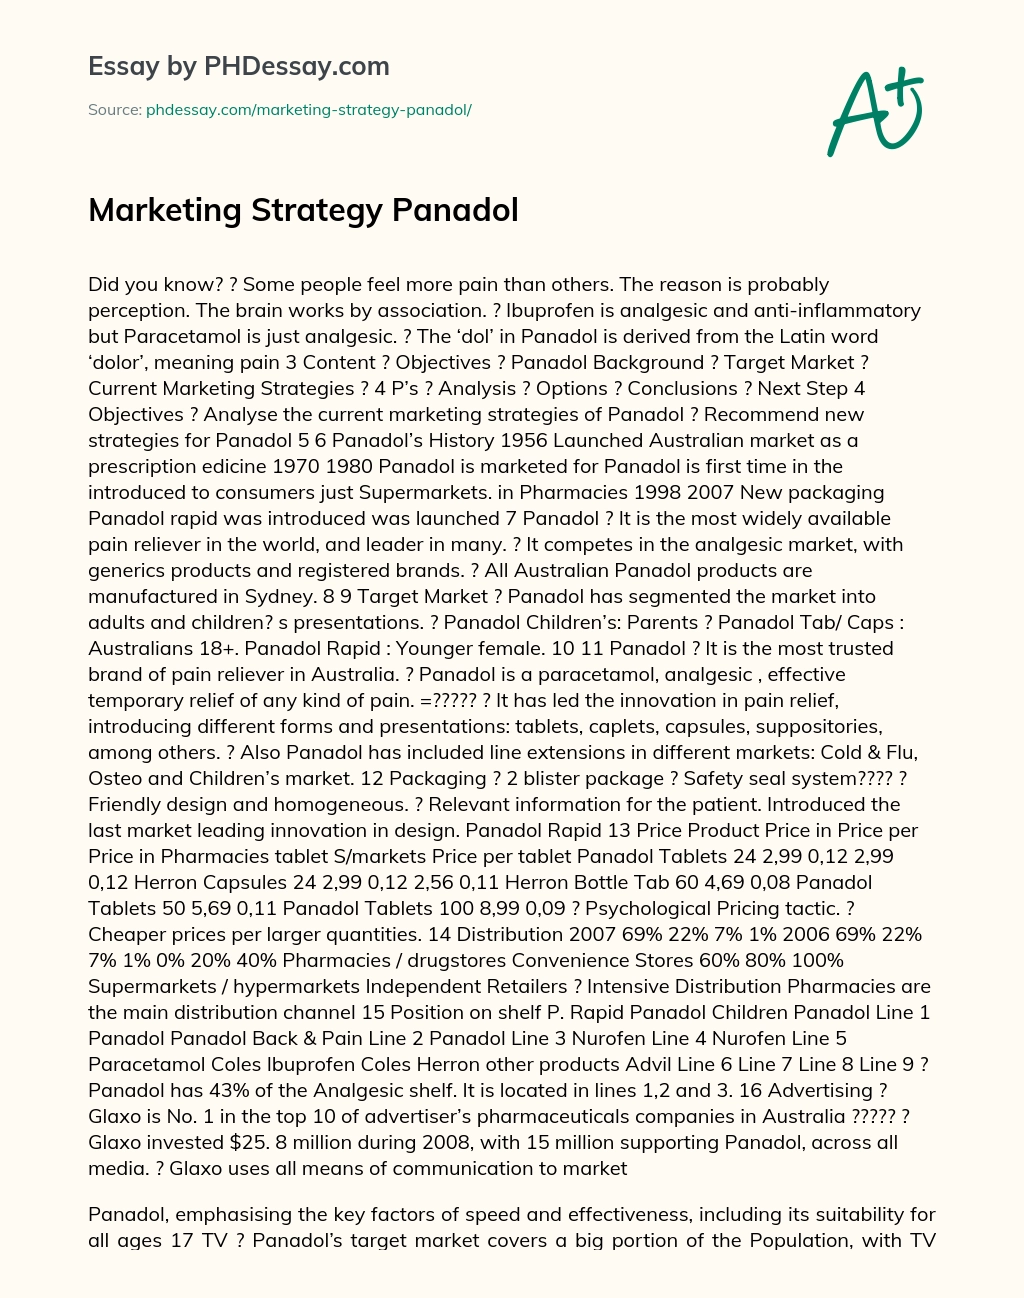 Marketing Strategy Panadol essay